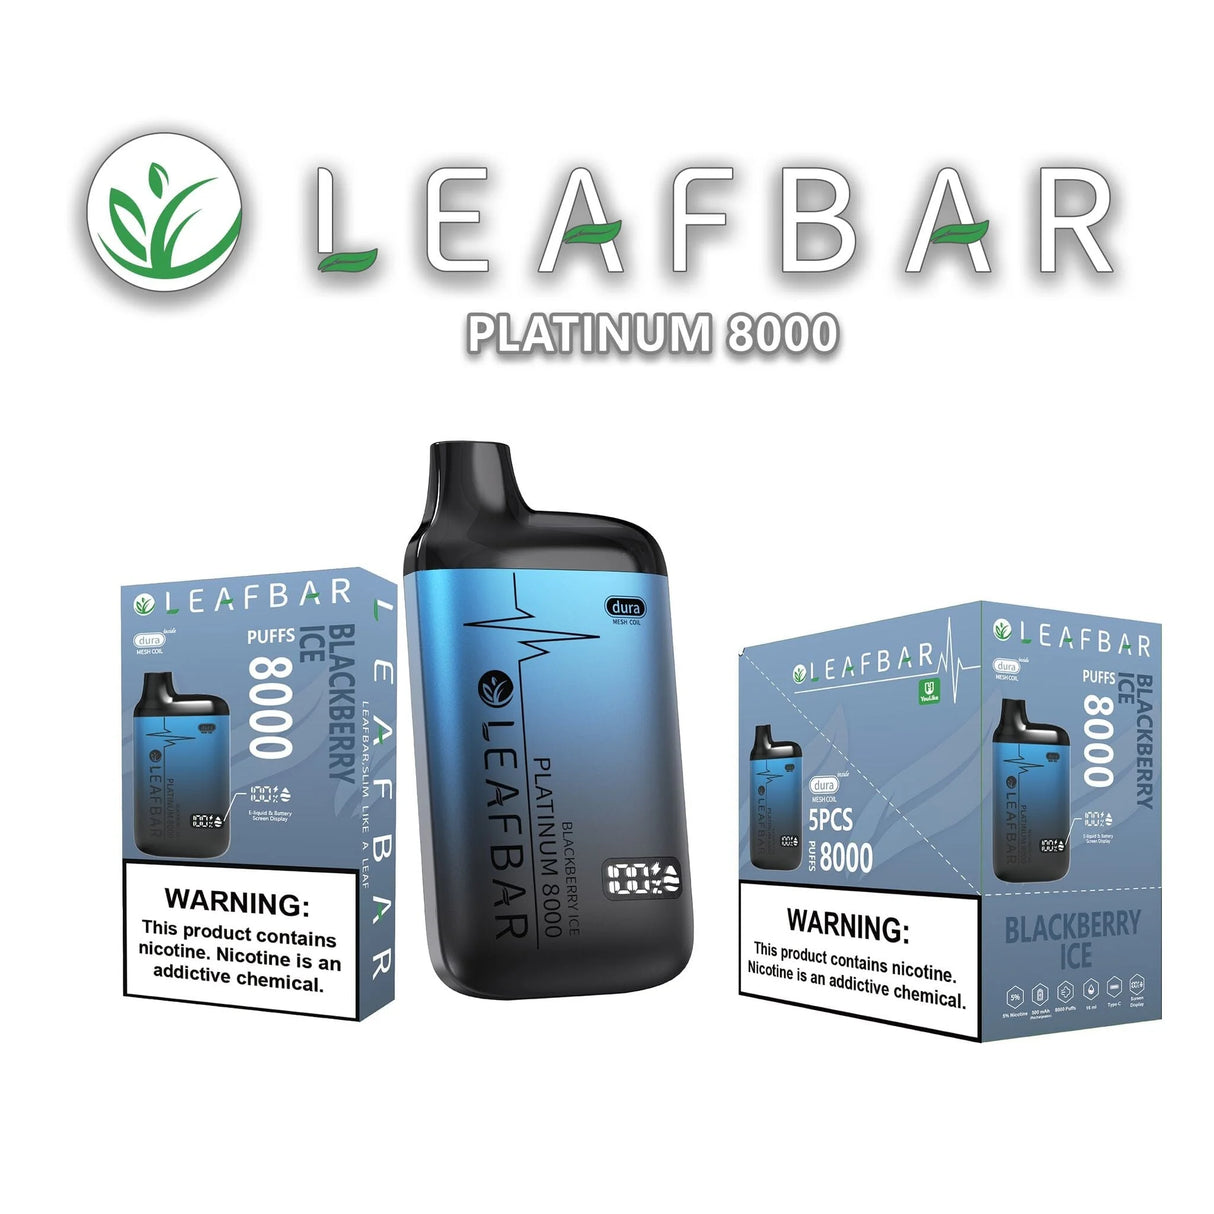 Leaf Bar Platinum Disposable Vape 8000 Puffs - 6 Pack